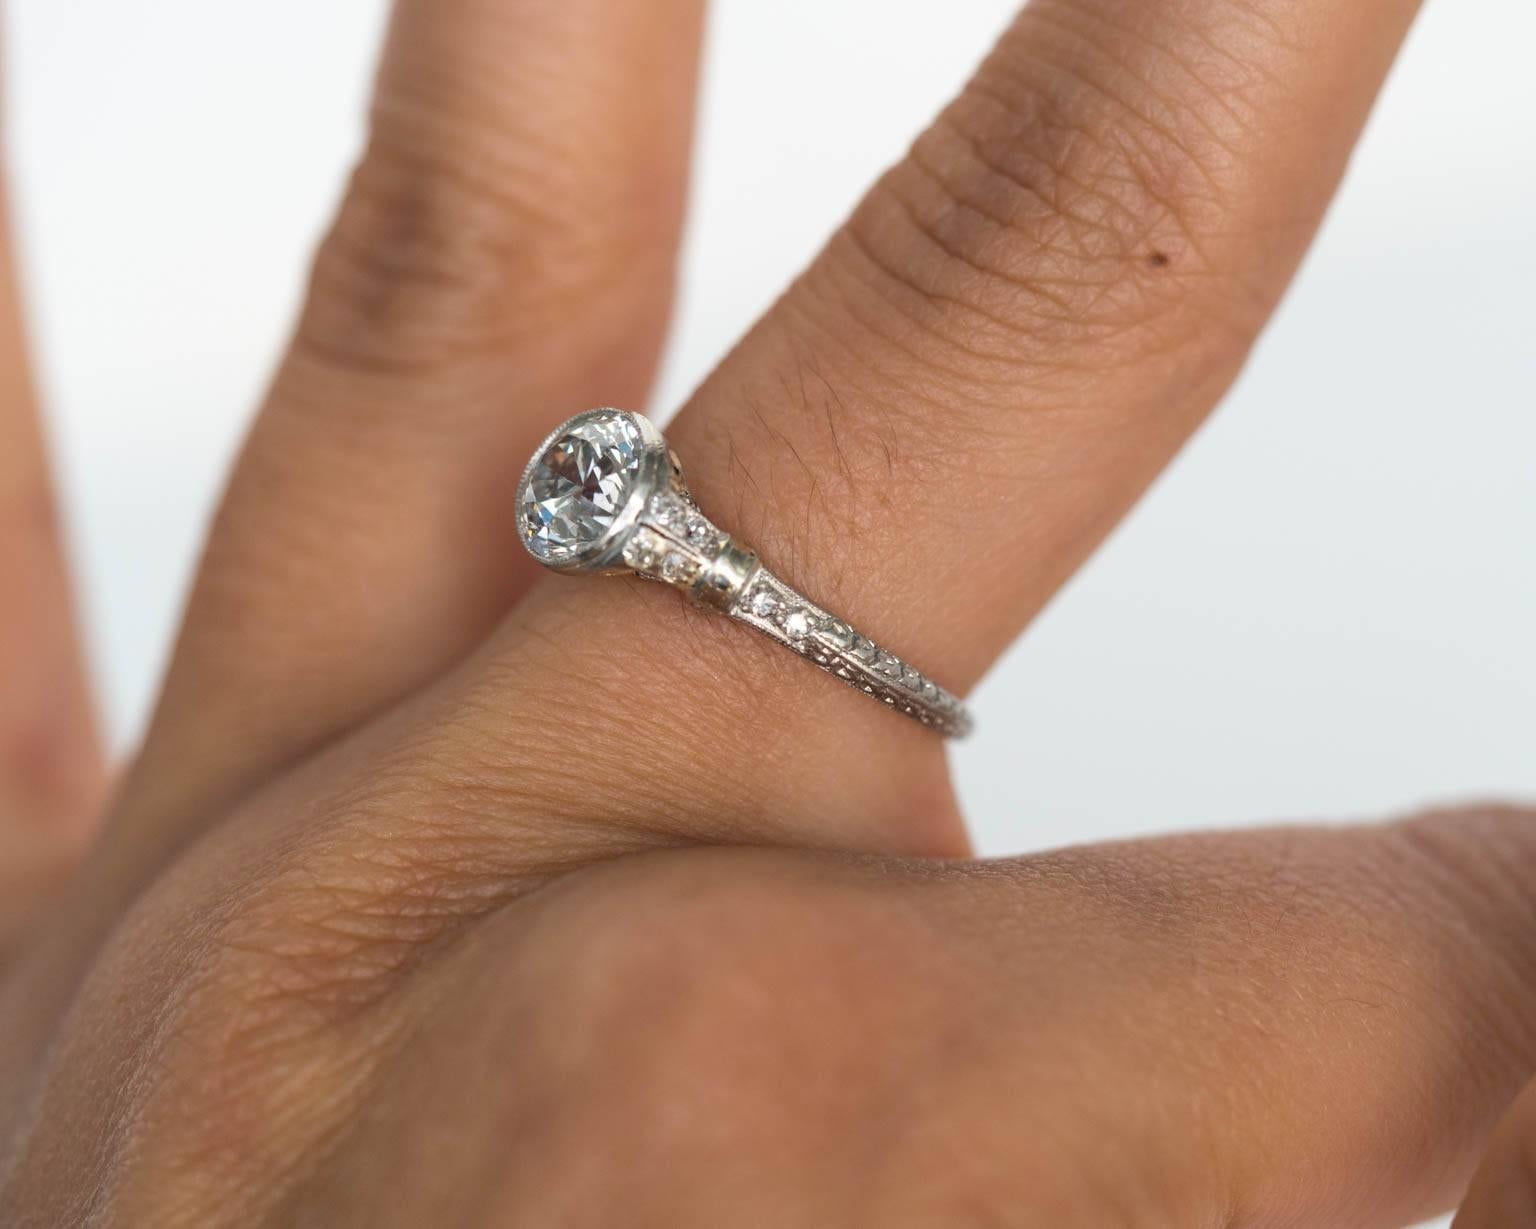 Women's 1920s Art Deco Platinum 1.01 carat Diamond Engagement Ring with Side Stones